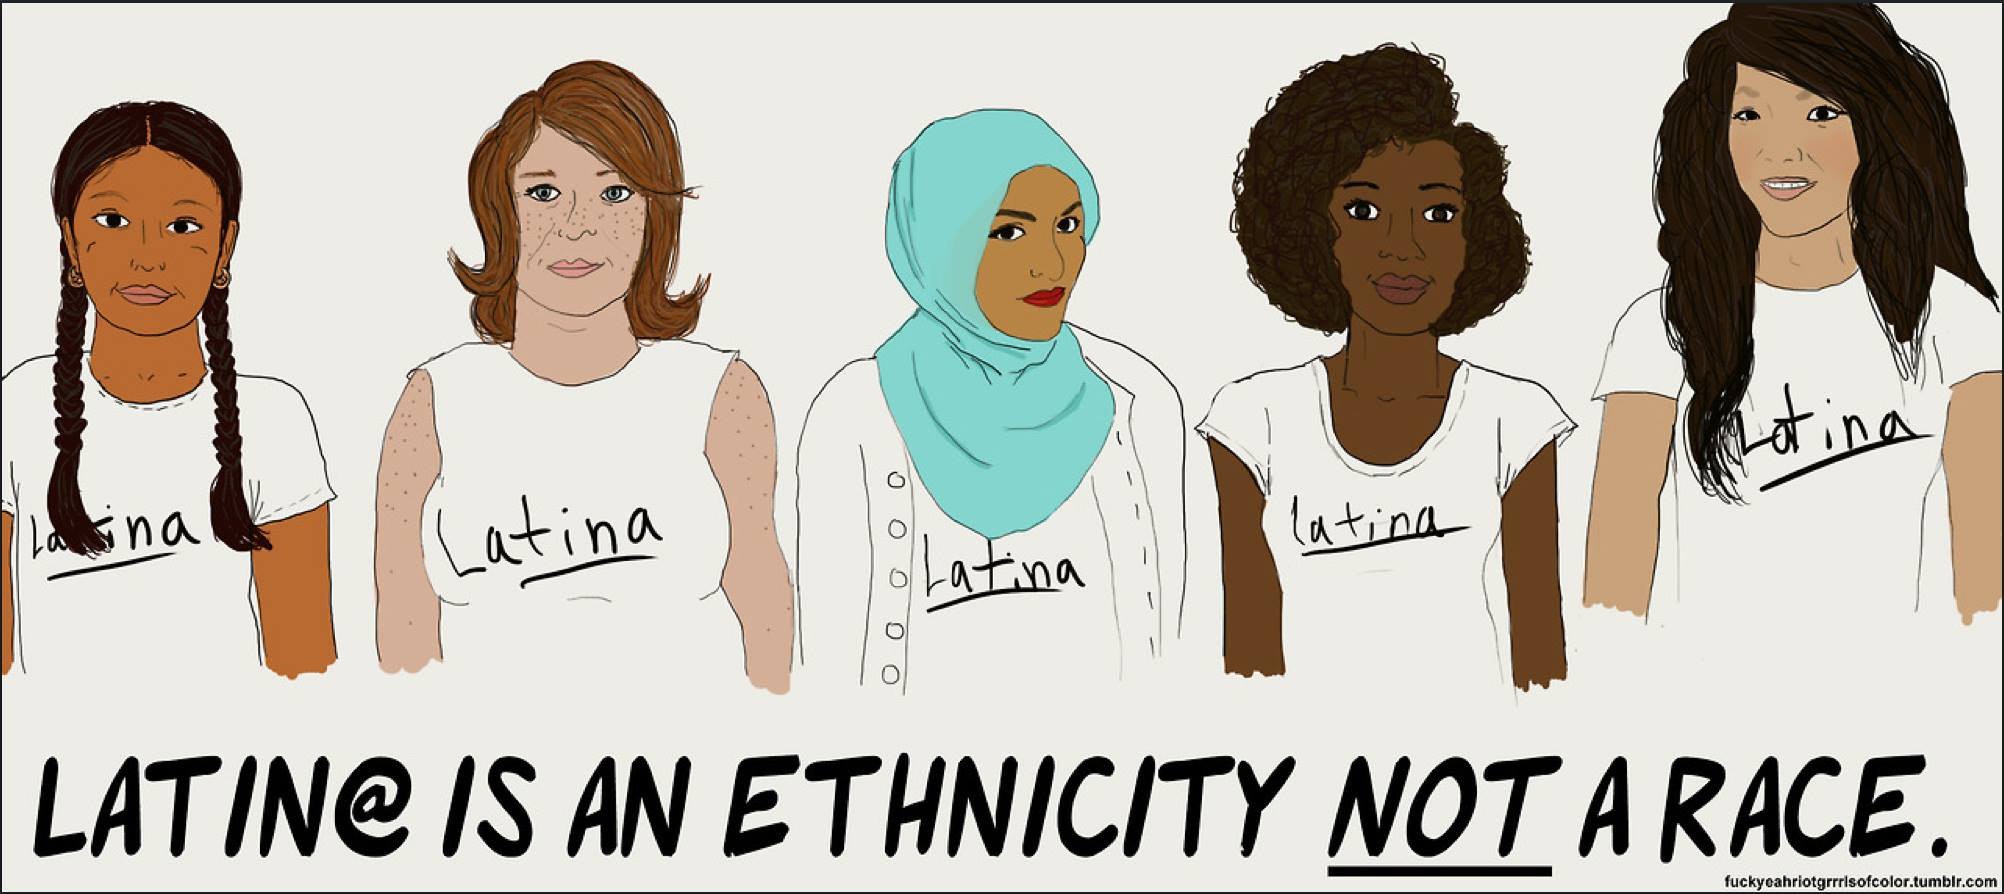 Race!=Ethnicity